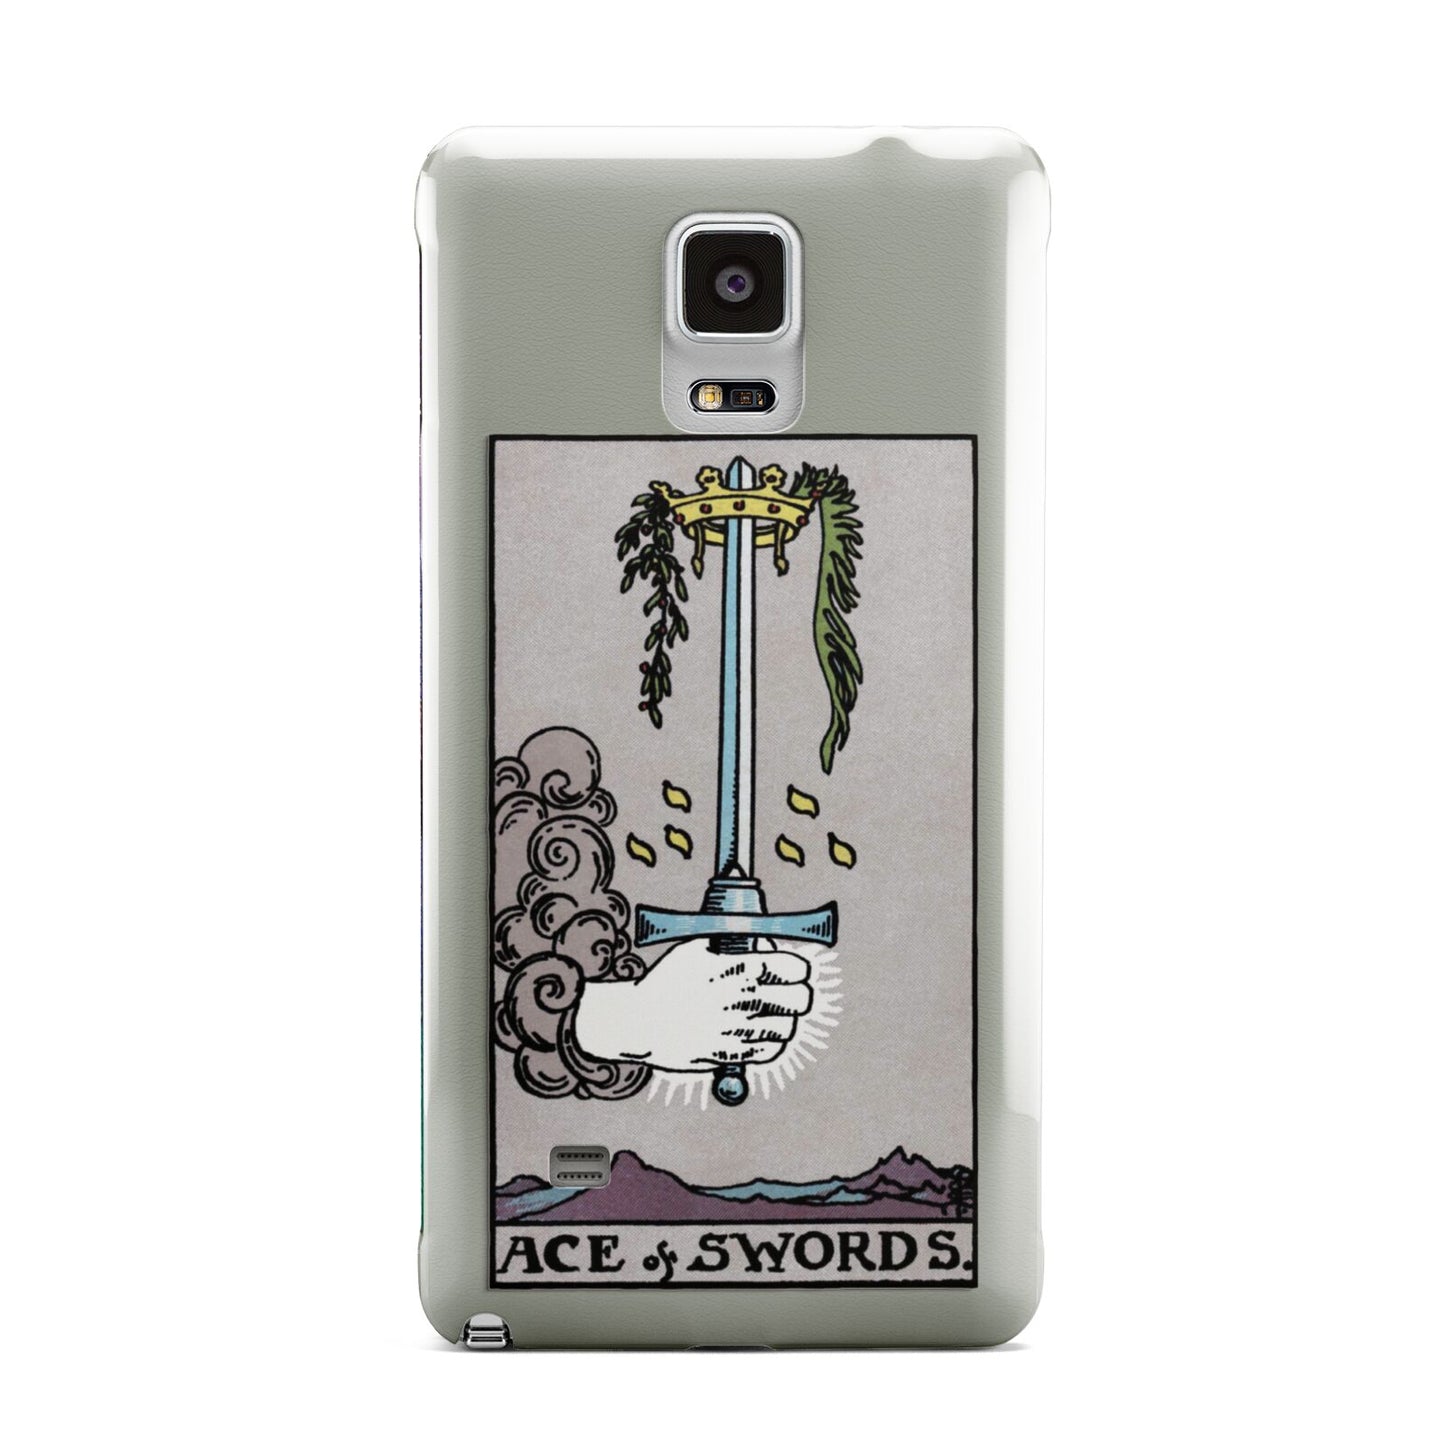 Ace of Swords Tarot Card Samsung Galaxy Note 4 Case